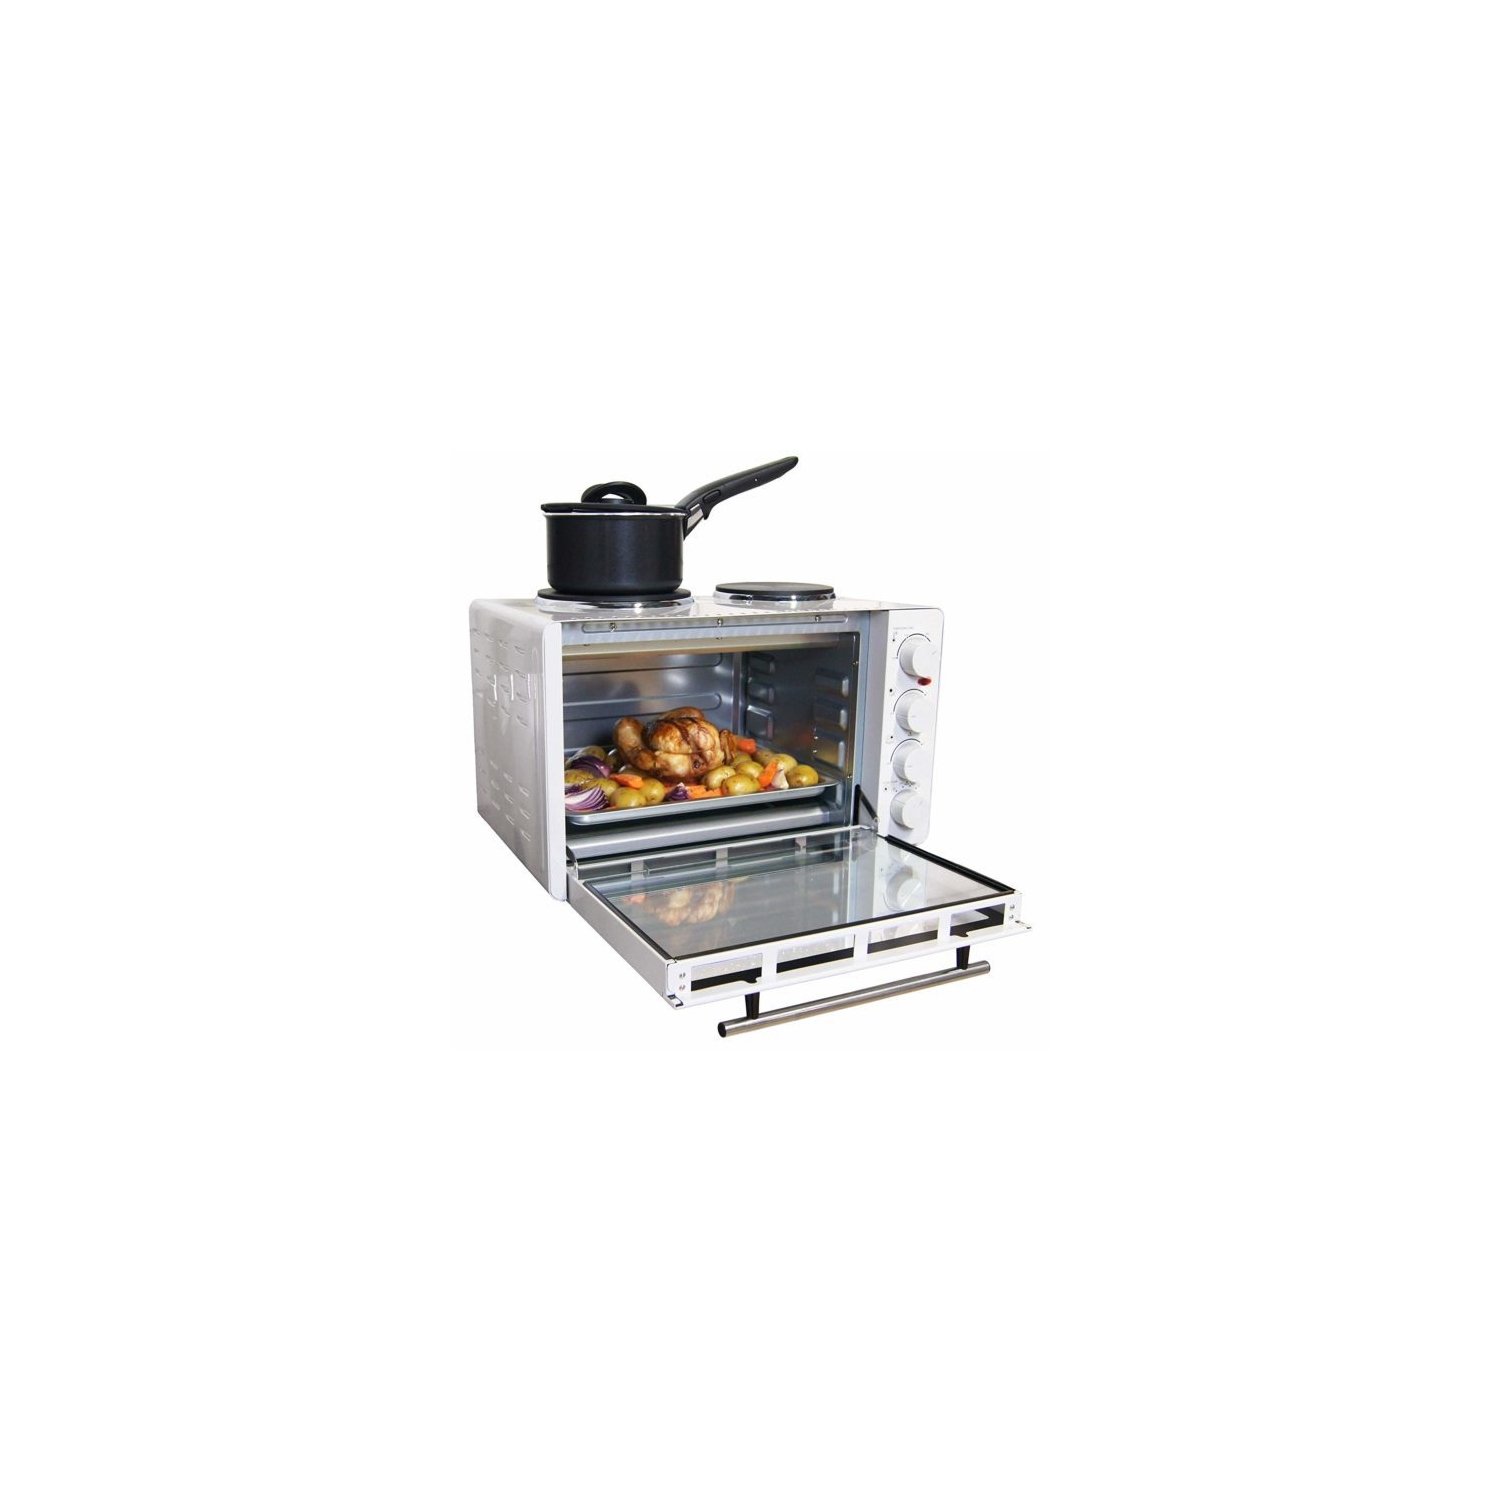 Igenix Electric Mini Oven, Double Hotplate Hob & Baking Tray, 30 Litre Capacity - 0